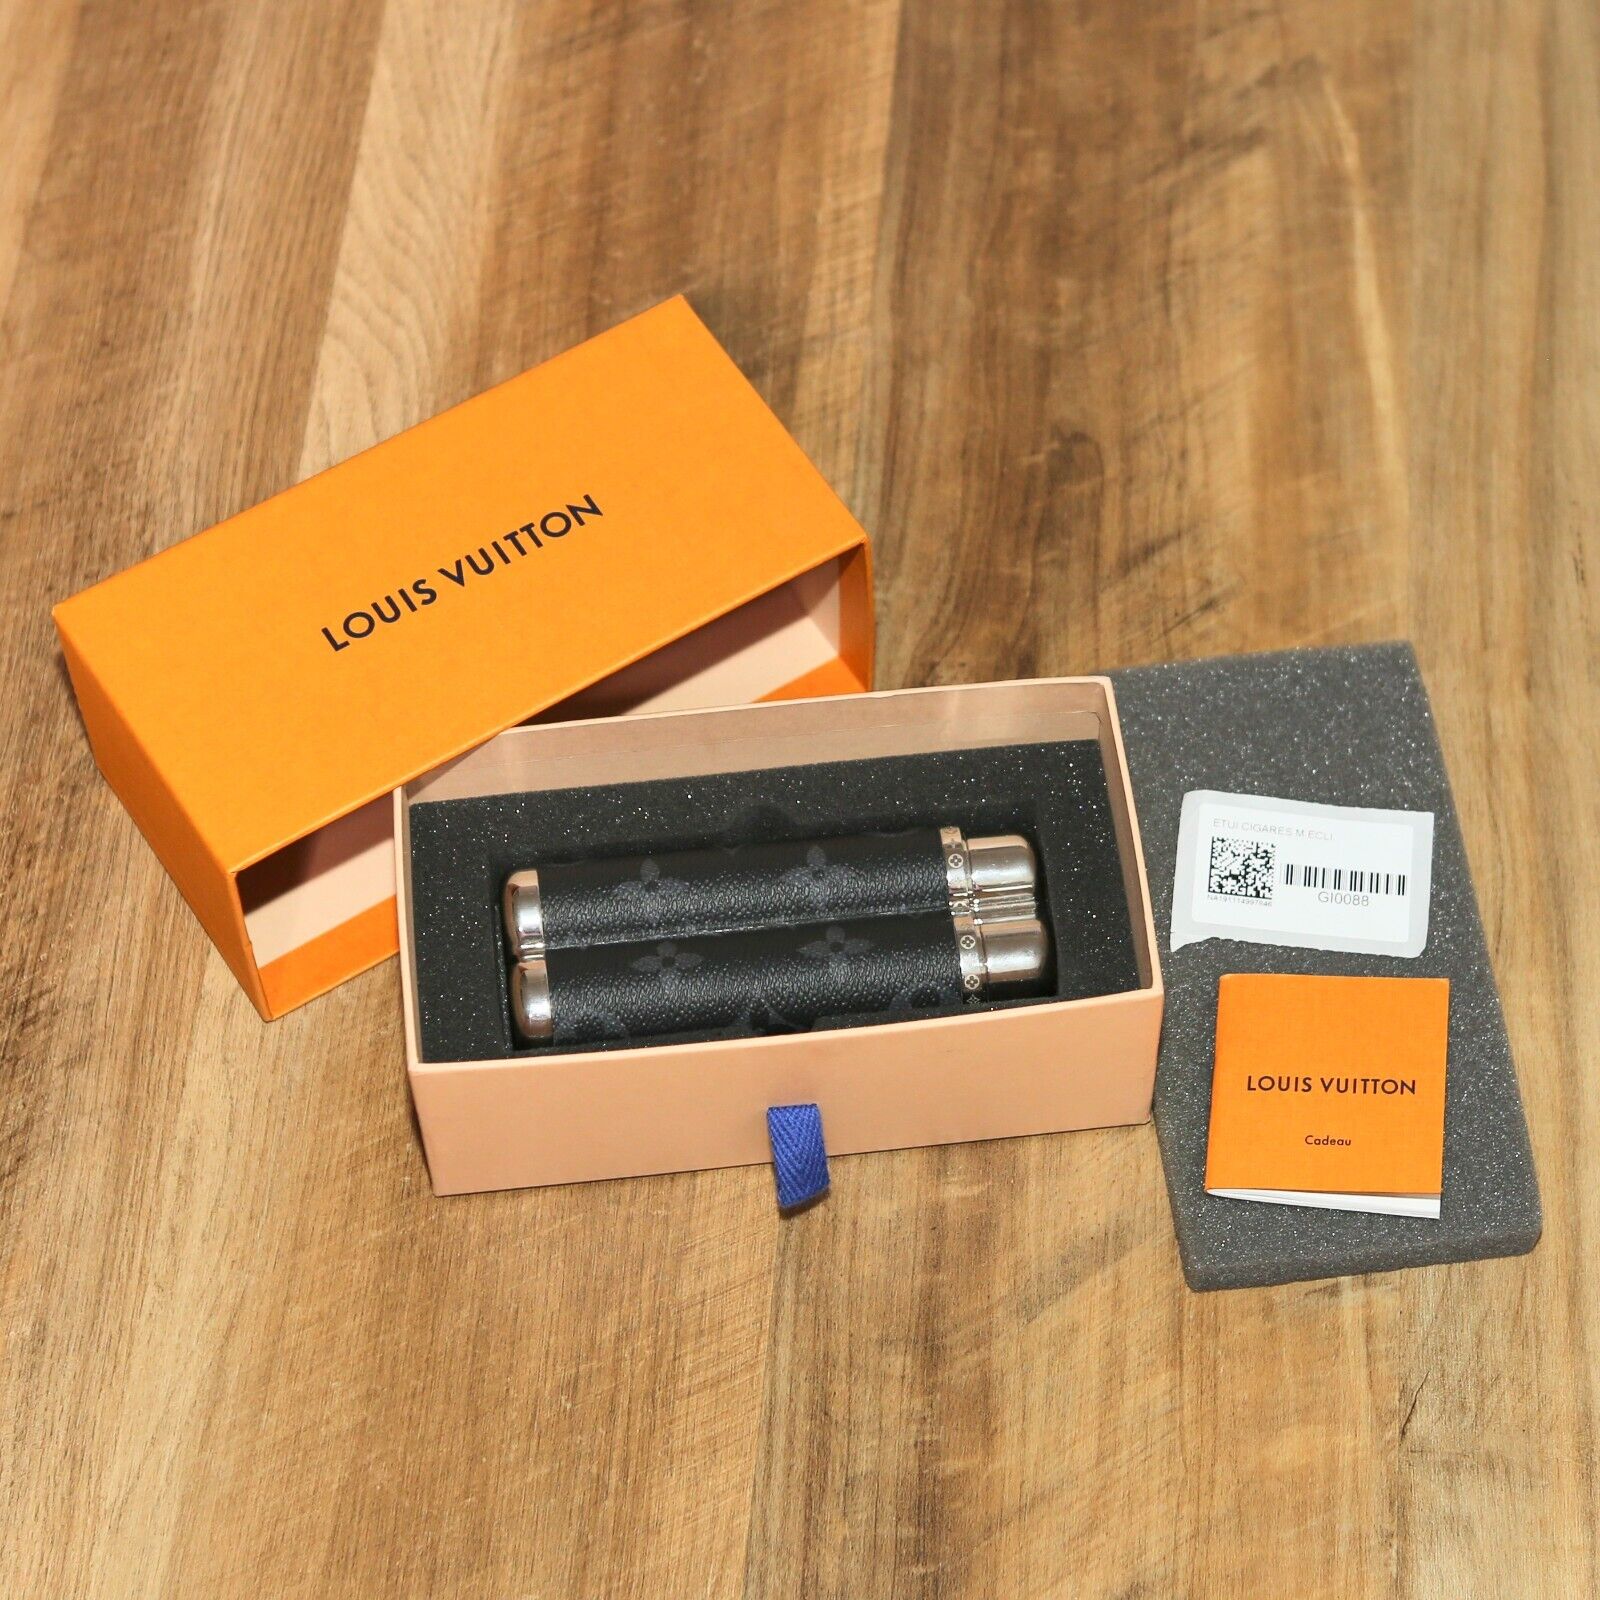 LOUIS VUITTON - RARE 2019 Model GI0088 Monogram Dual Cigar Case - NEW IN BOX 🔥